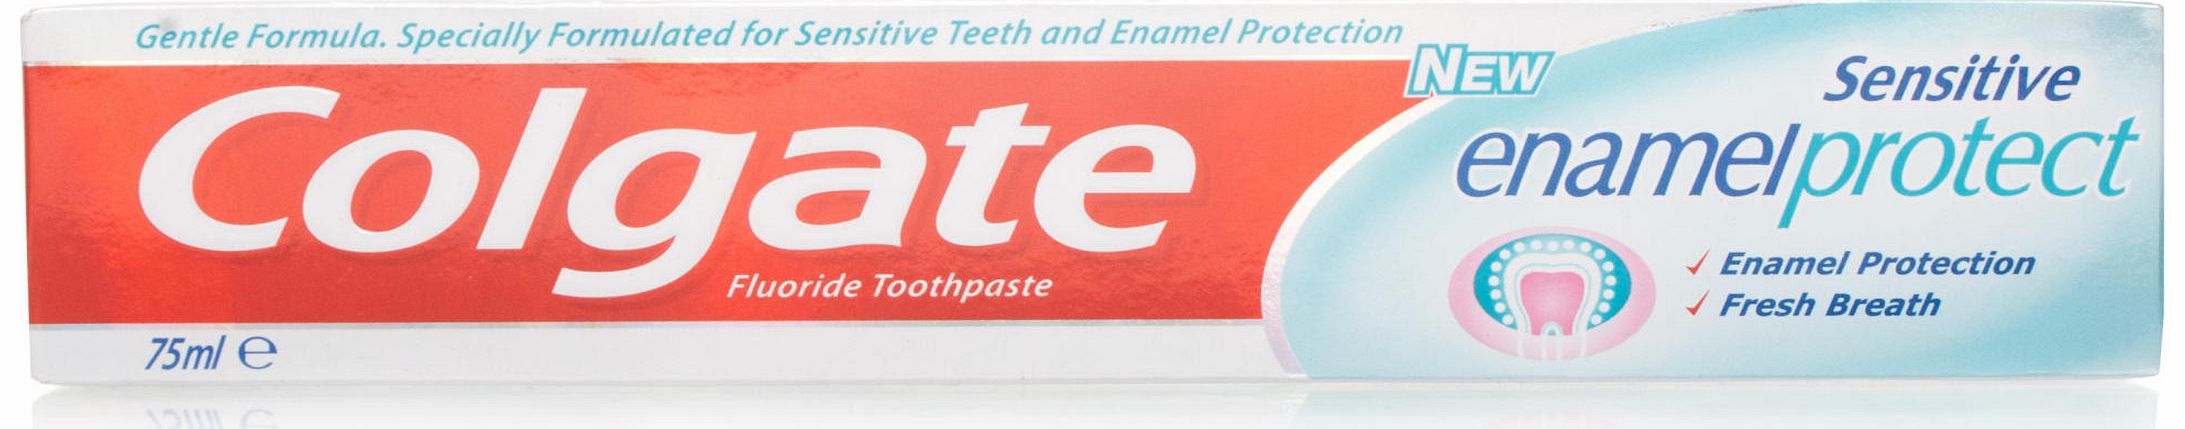 Sensitive Enamel Protect Toothpaste